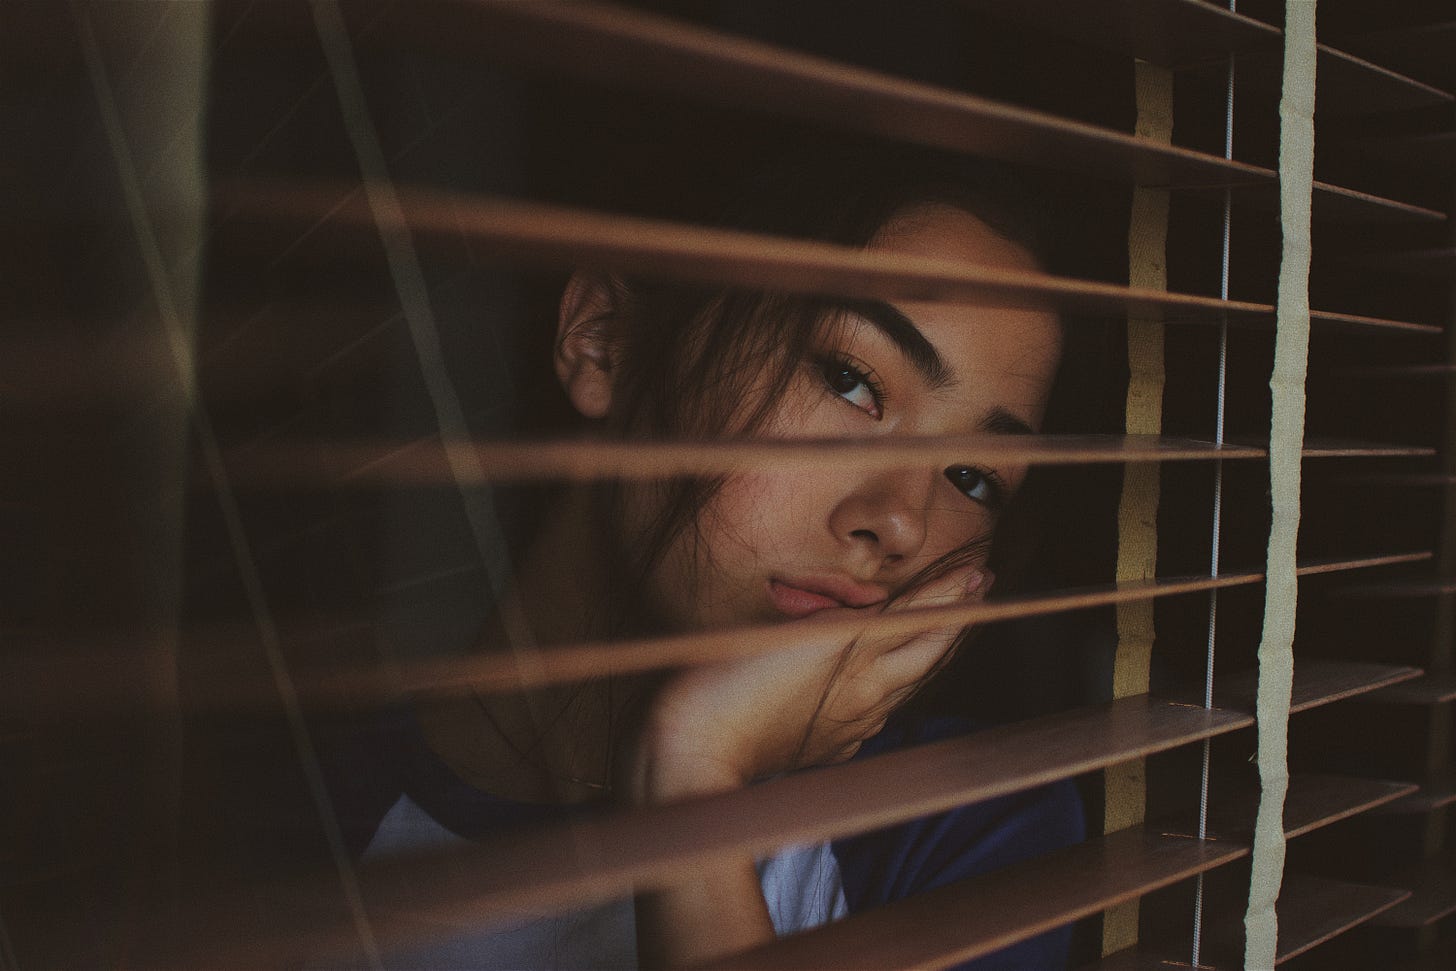 Sad looking thai woman staring through some window blinds